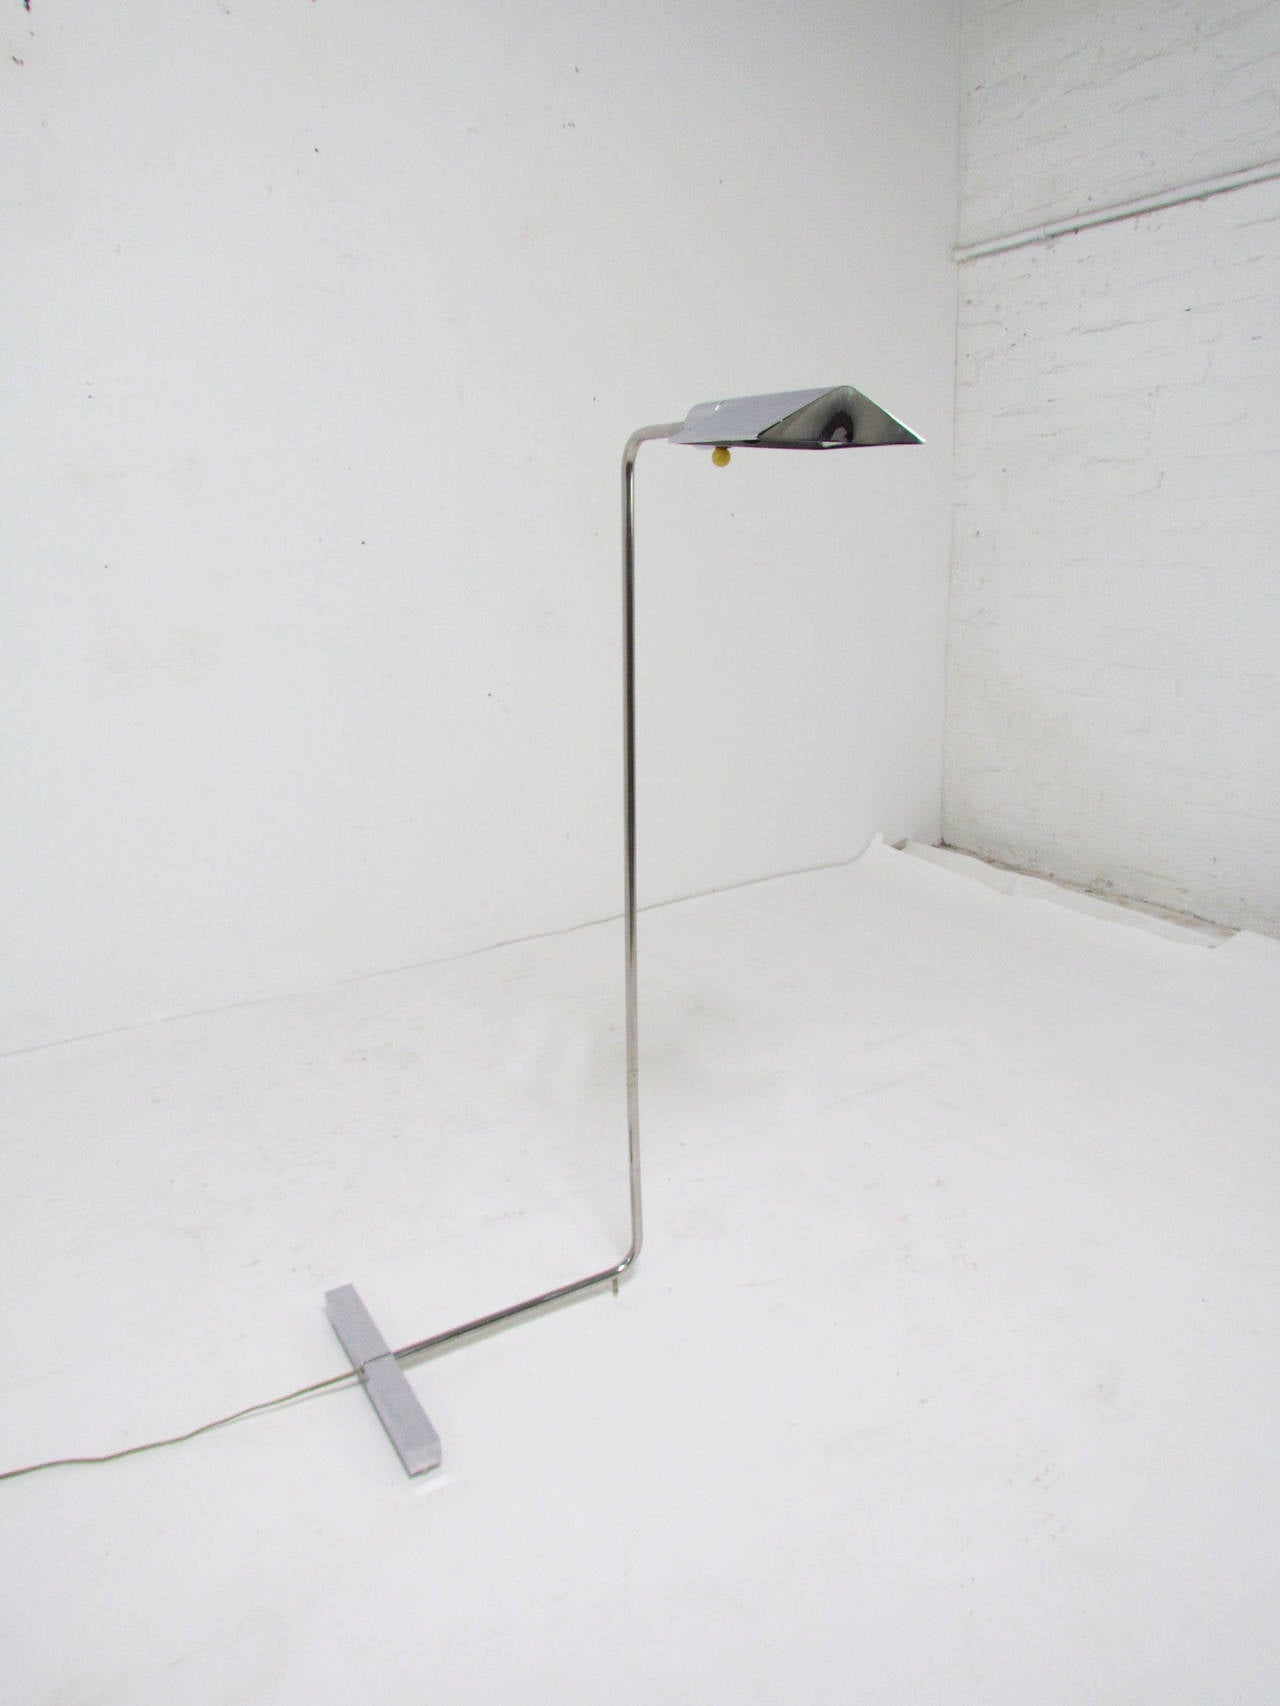 Adjustable Low Profile Floor Lamp in Chrome by Cedric Hartman 2